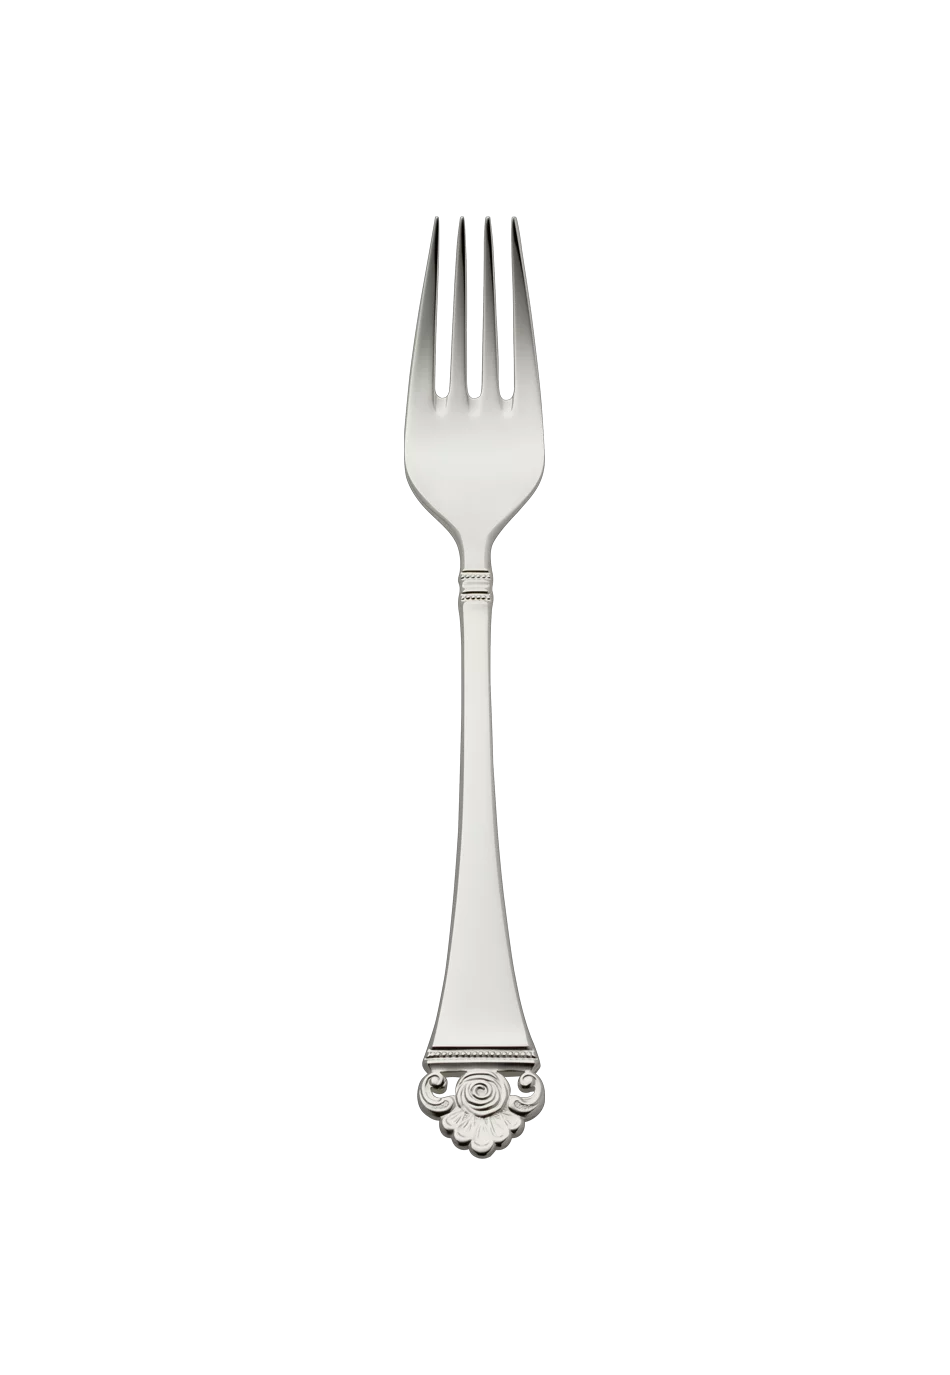 Rosenmuster Menu Fork (150g massive silverplated)